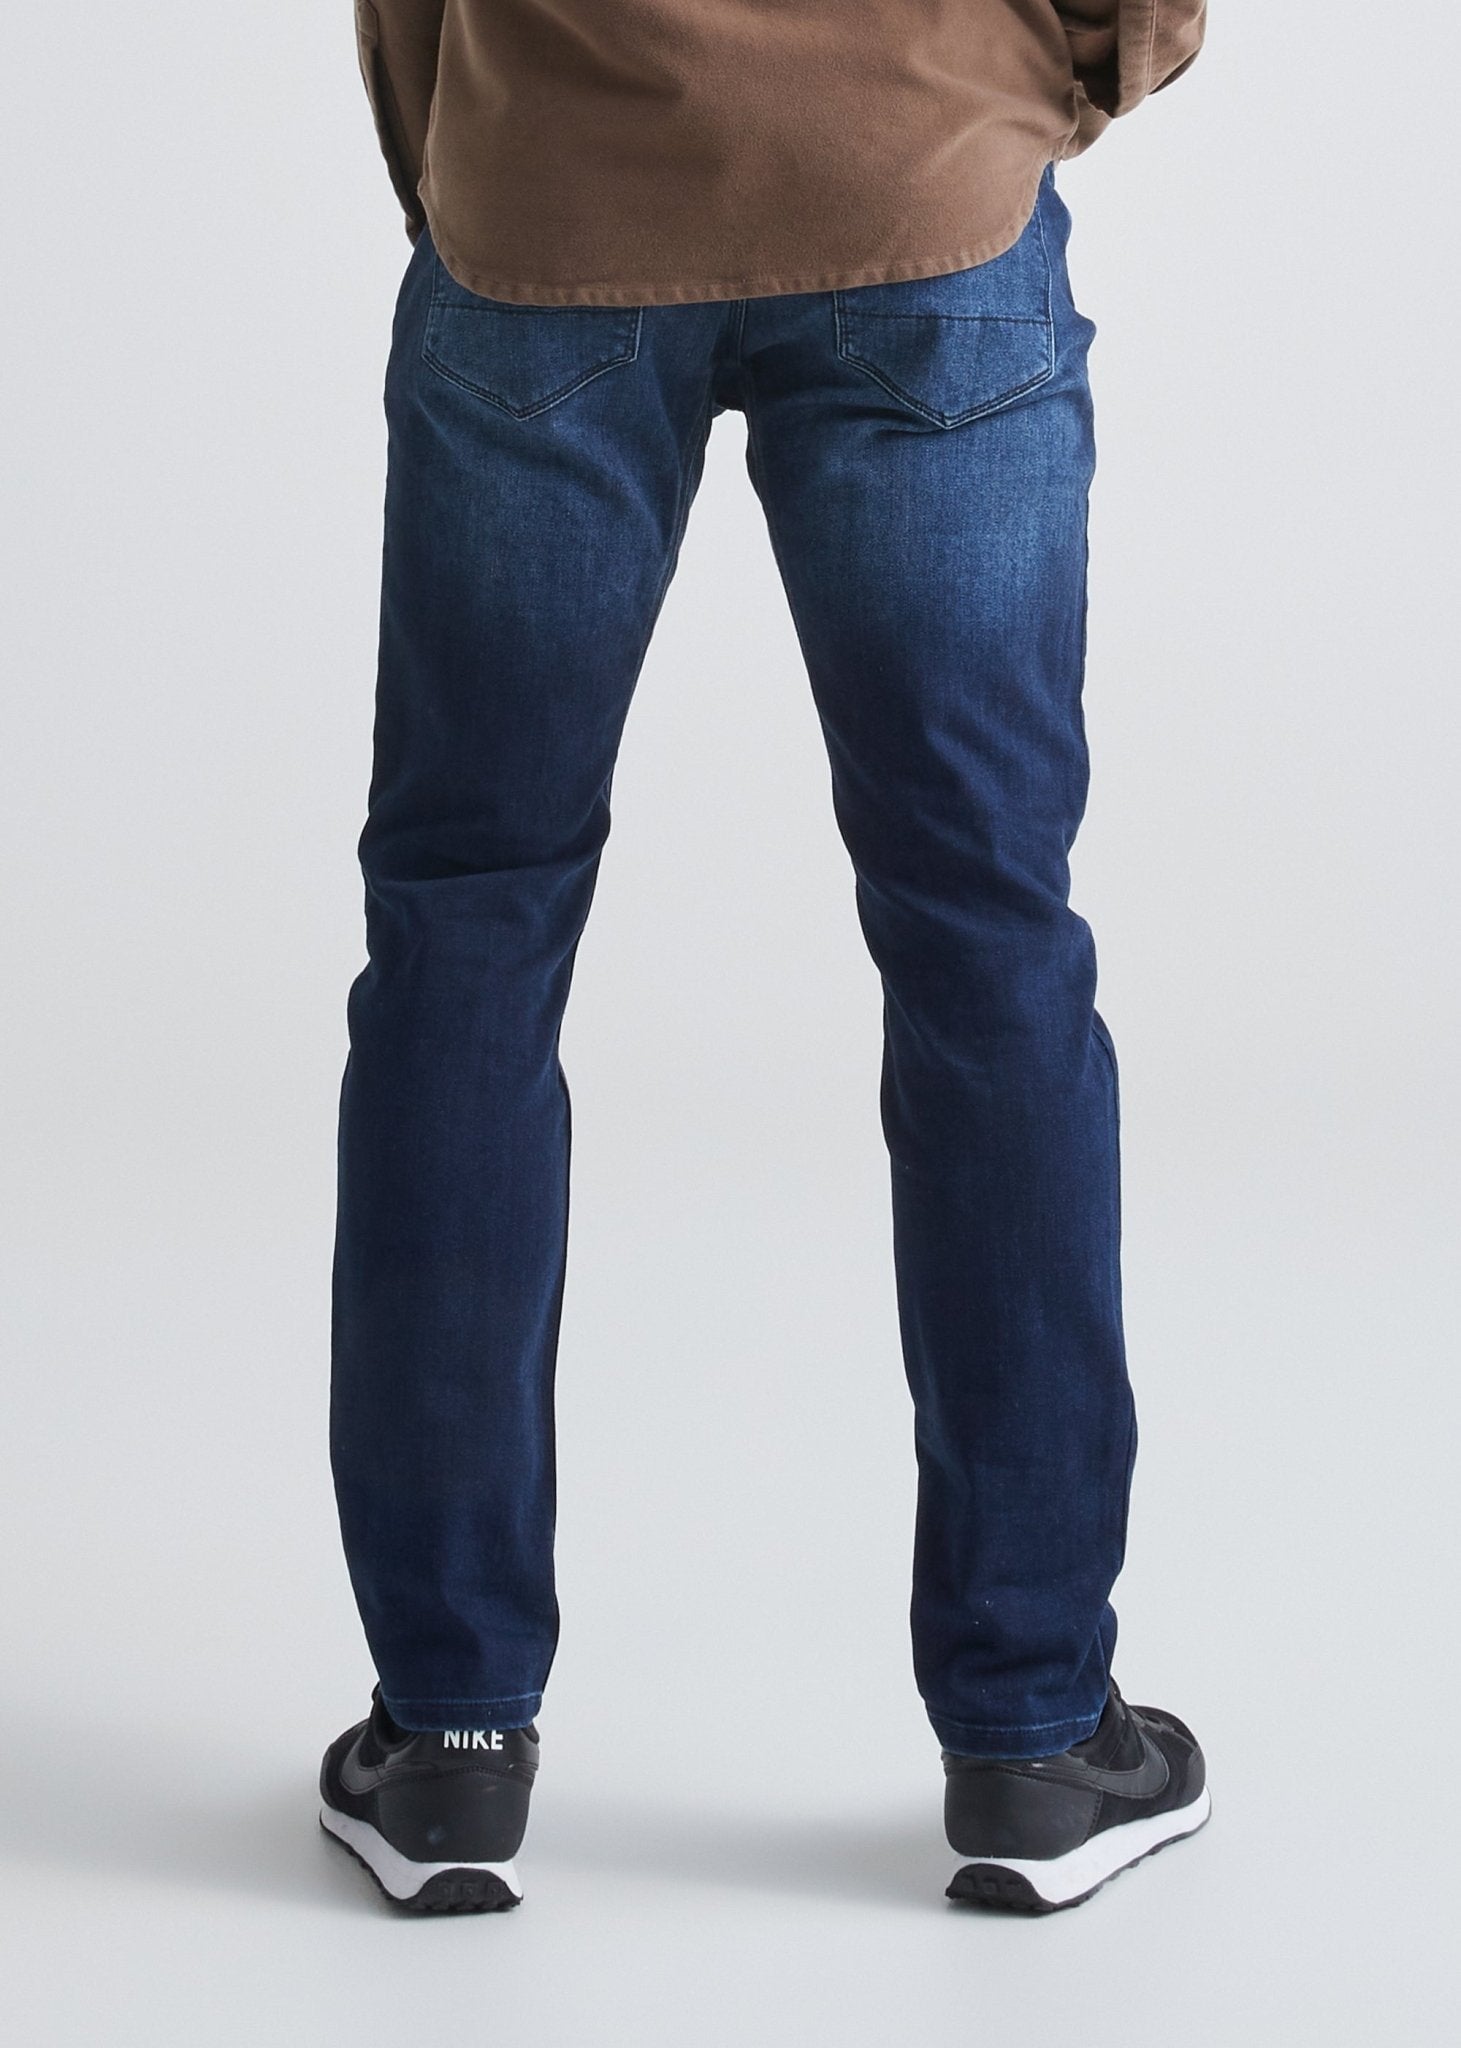 Jeans Water Men\'s Slim Fit Stretch Resistant